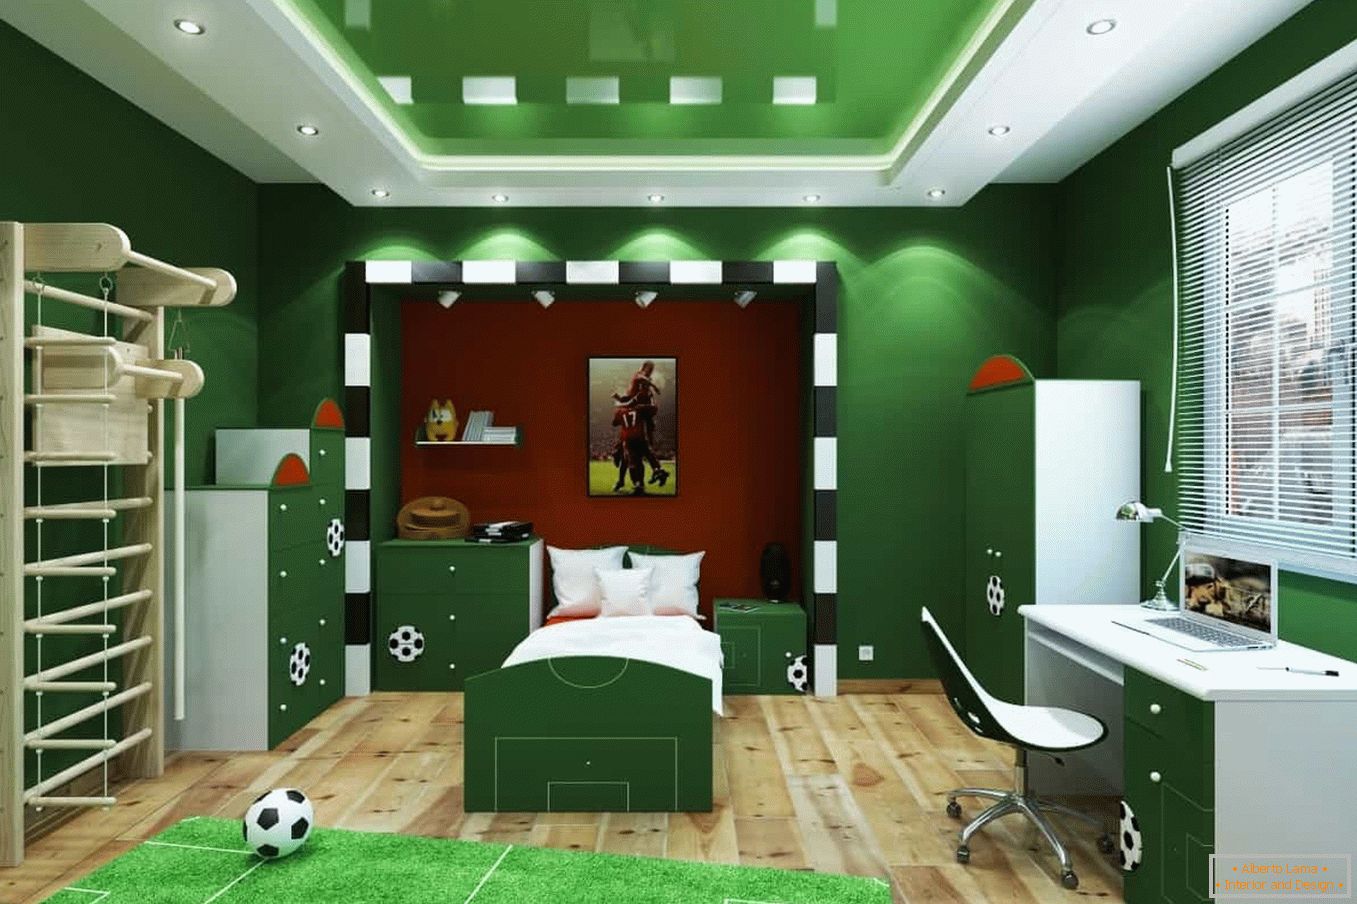 Зелена кімната - футбольне поле